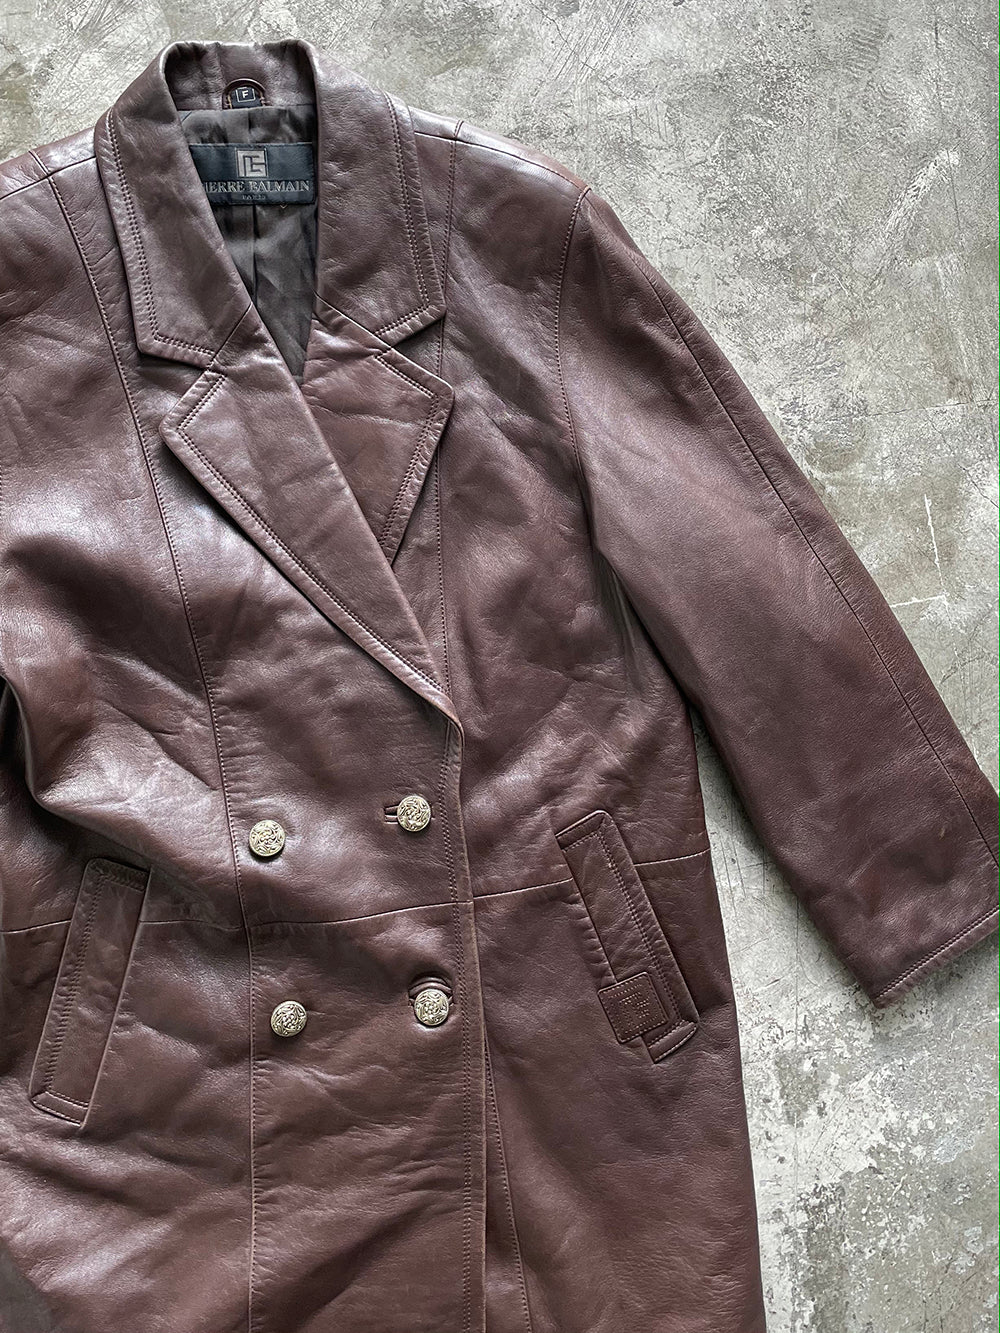 Pierre balmain brown leather coat